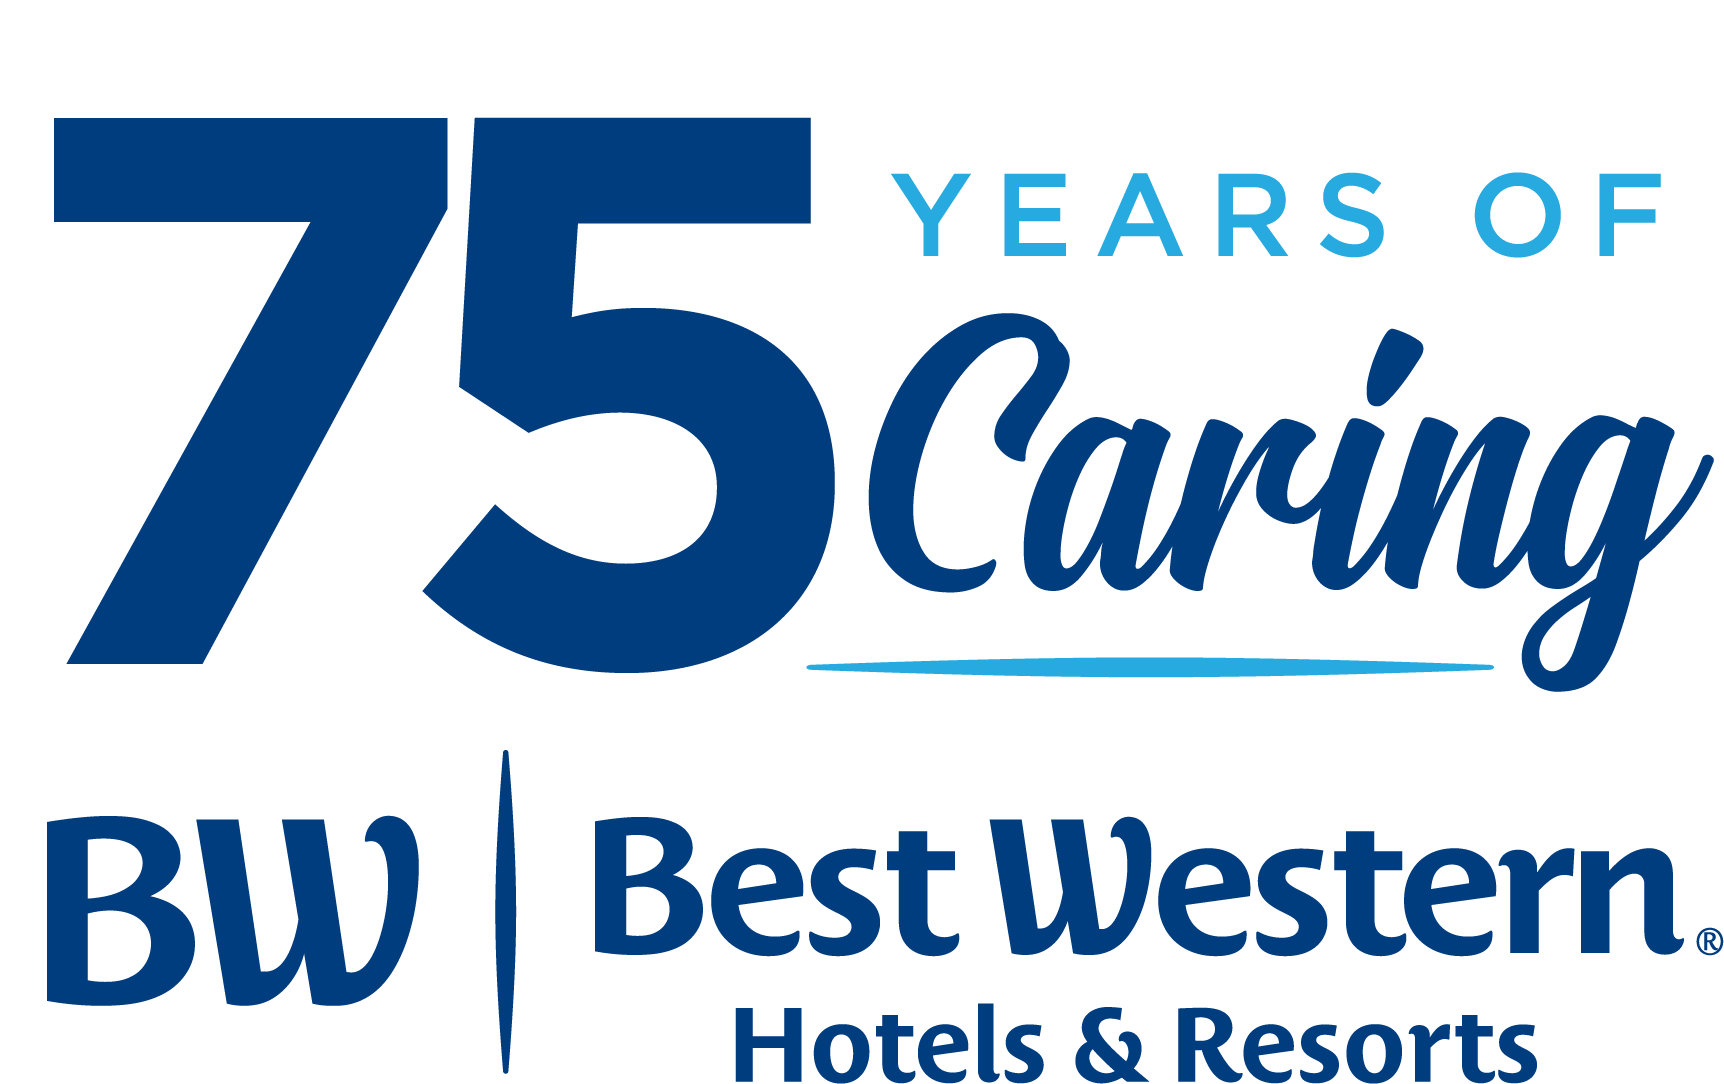 Best Western 75th Anniversary Logo